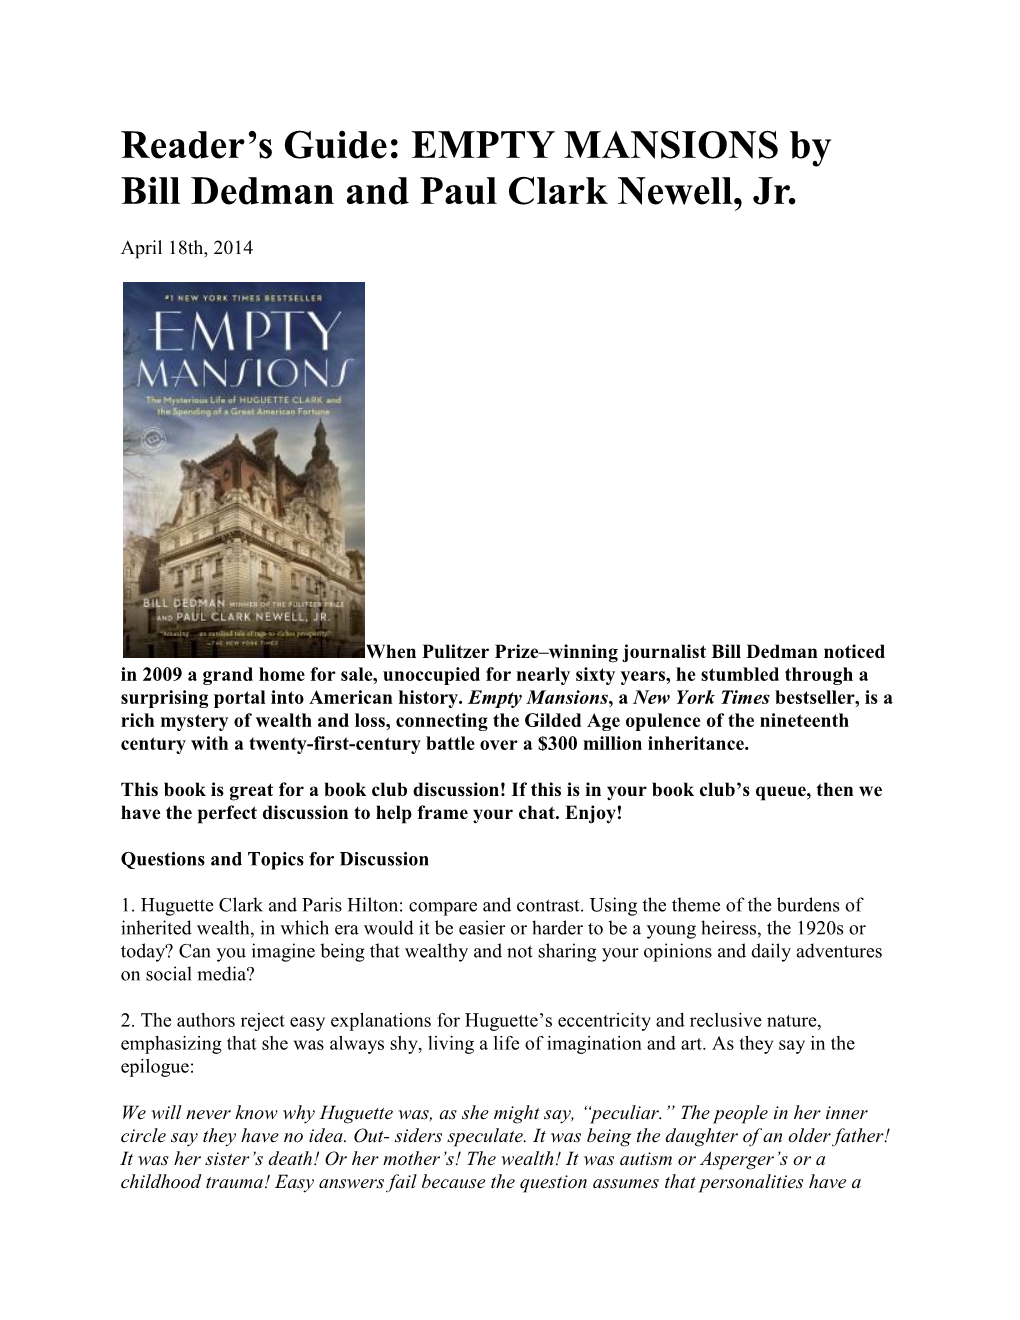 EMPTY MANSIONS by Bill Dedman and Paul Clark Newell, Jr